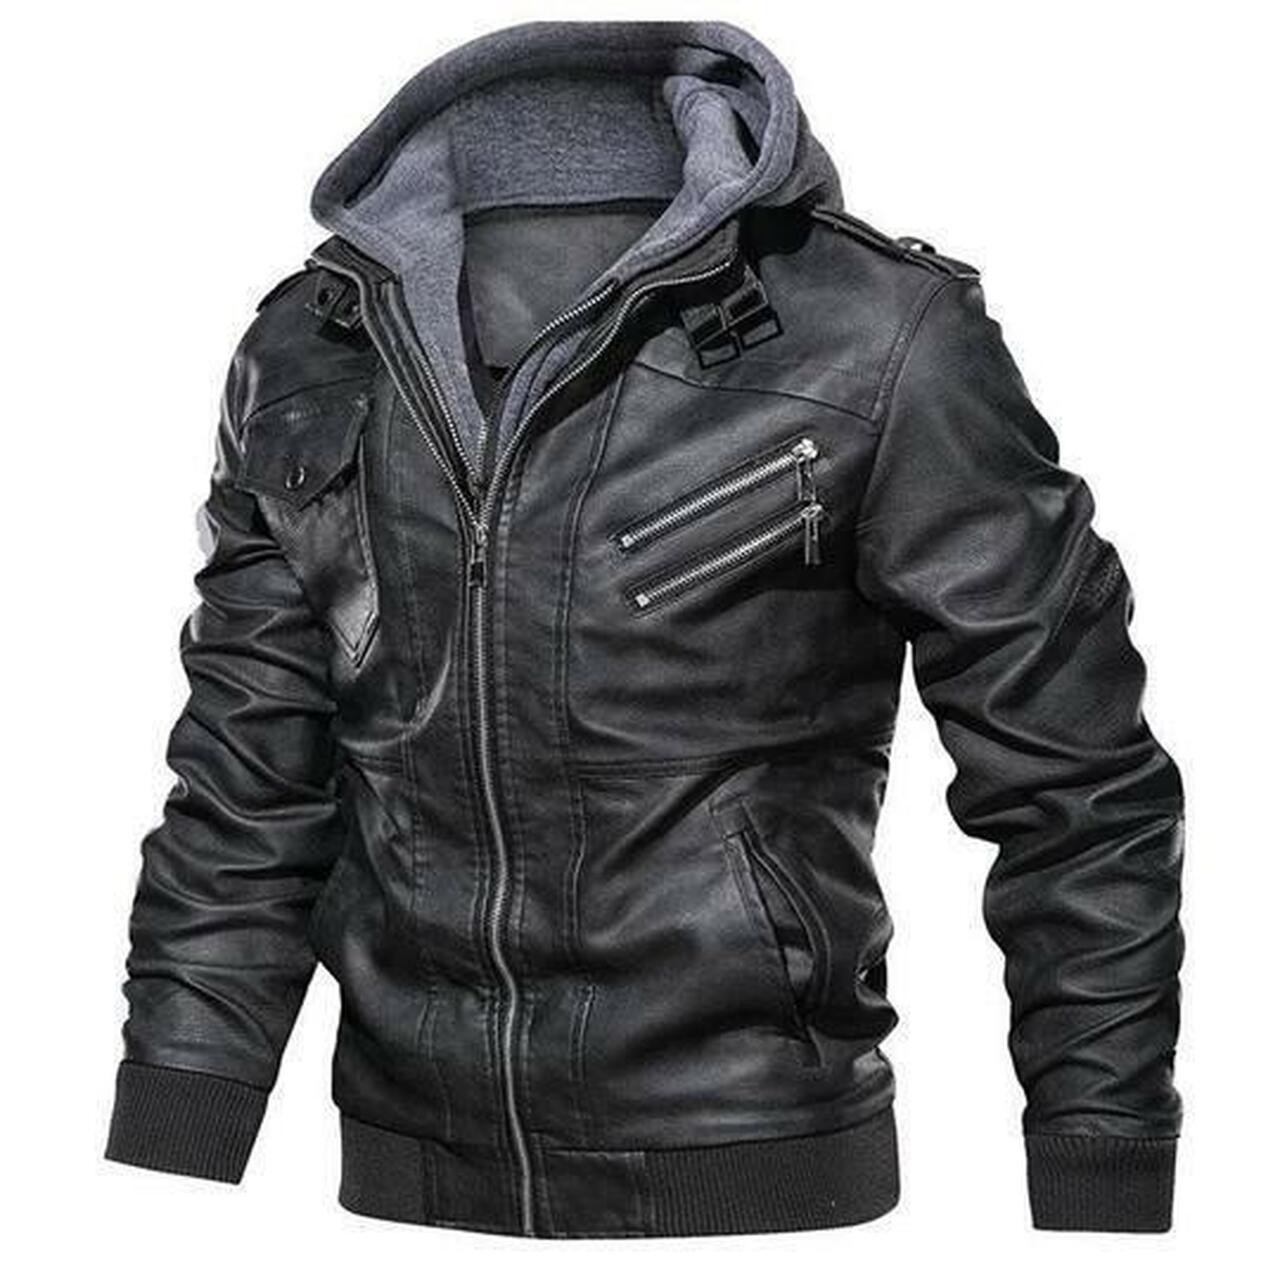 Top leather jacket Sells Best on Techcomshop 14